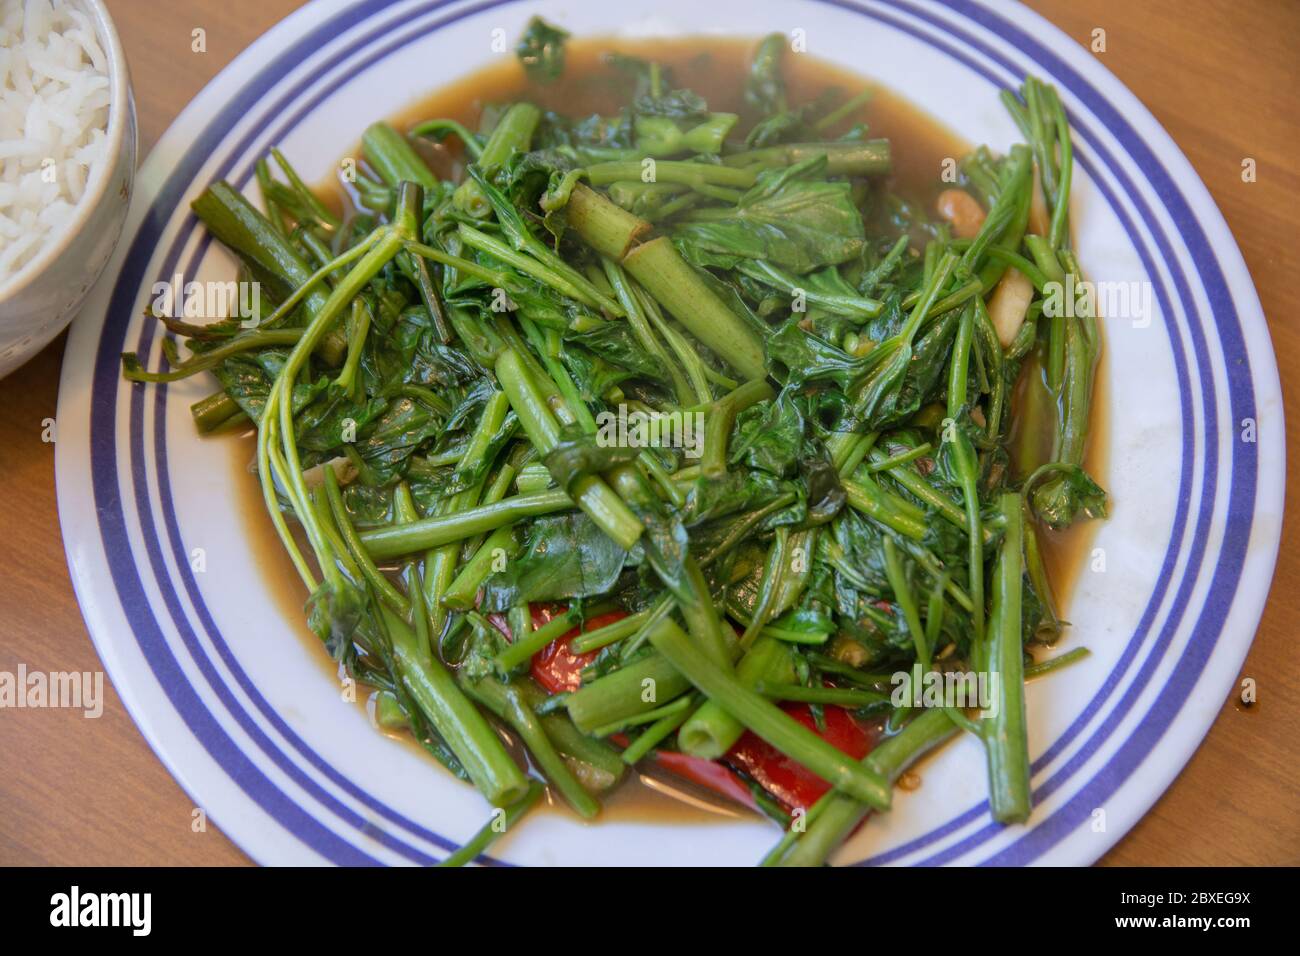 Vista superior de 'Pad Pak Boong', un plato tradicional tailandés: Verduras 'Morning Glory' fritas (Ipomoea aquatica) servidas en un plato blanco Foto de stock